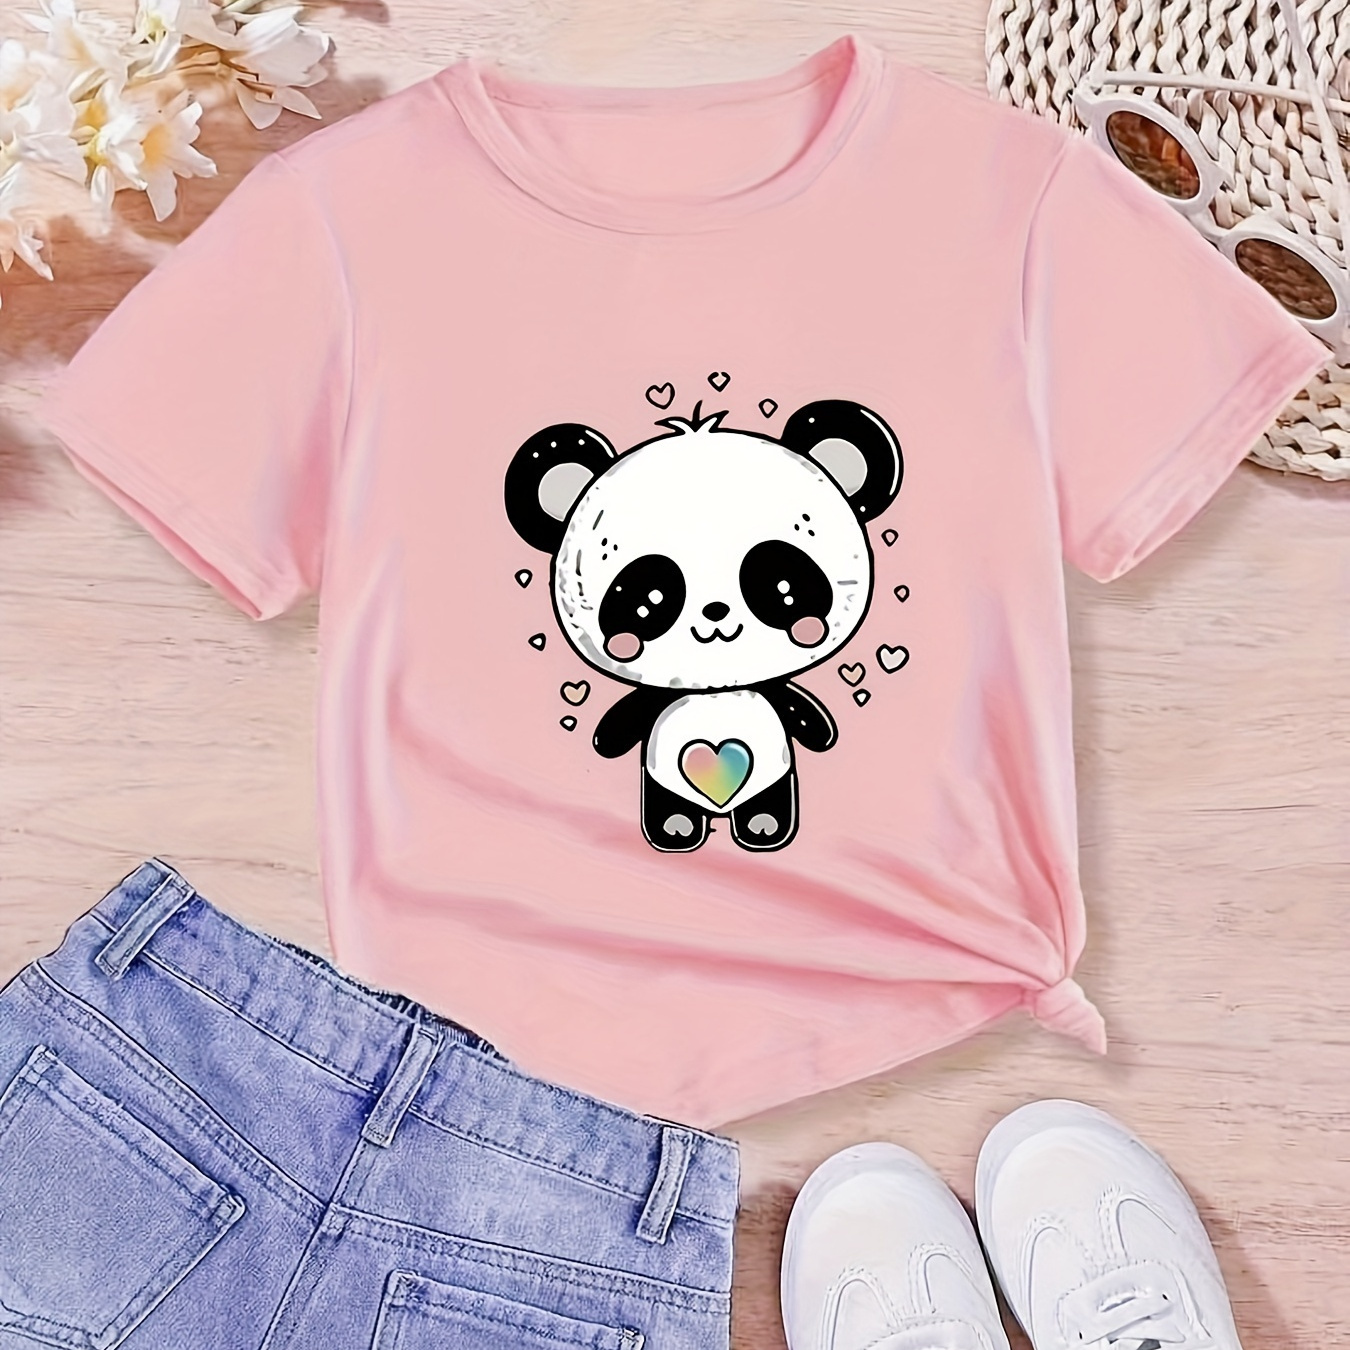 

Girls' Cute Panda & Heart Print T-shirt, Casual Round Neck Fashion Comfortable Spring/summer Tee, Kids Clothing Gift